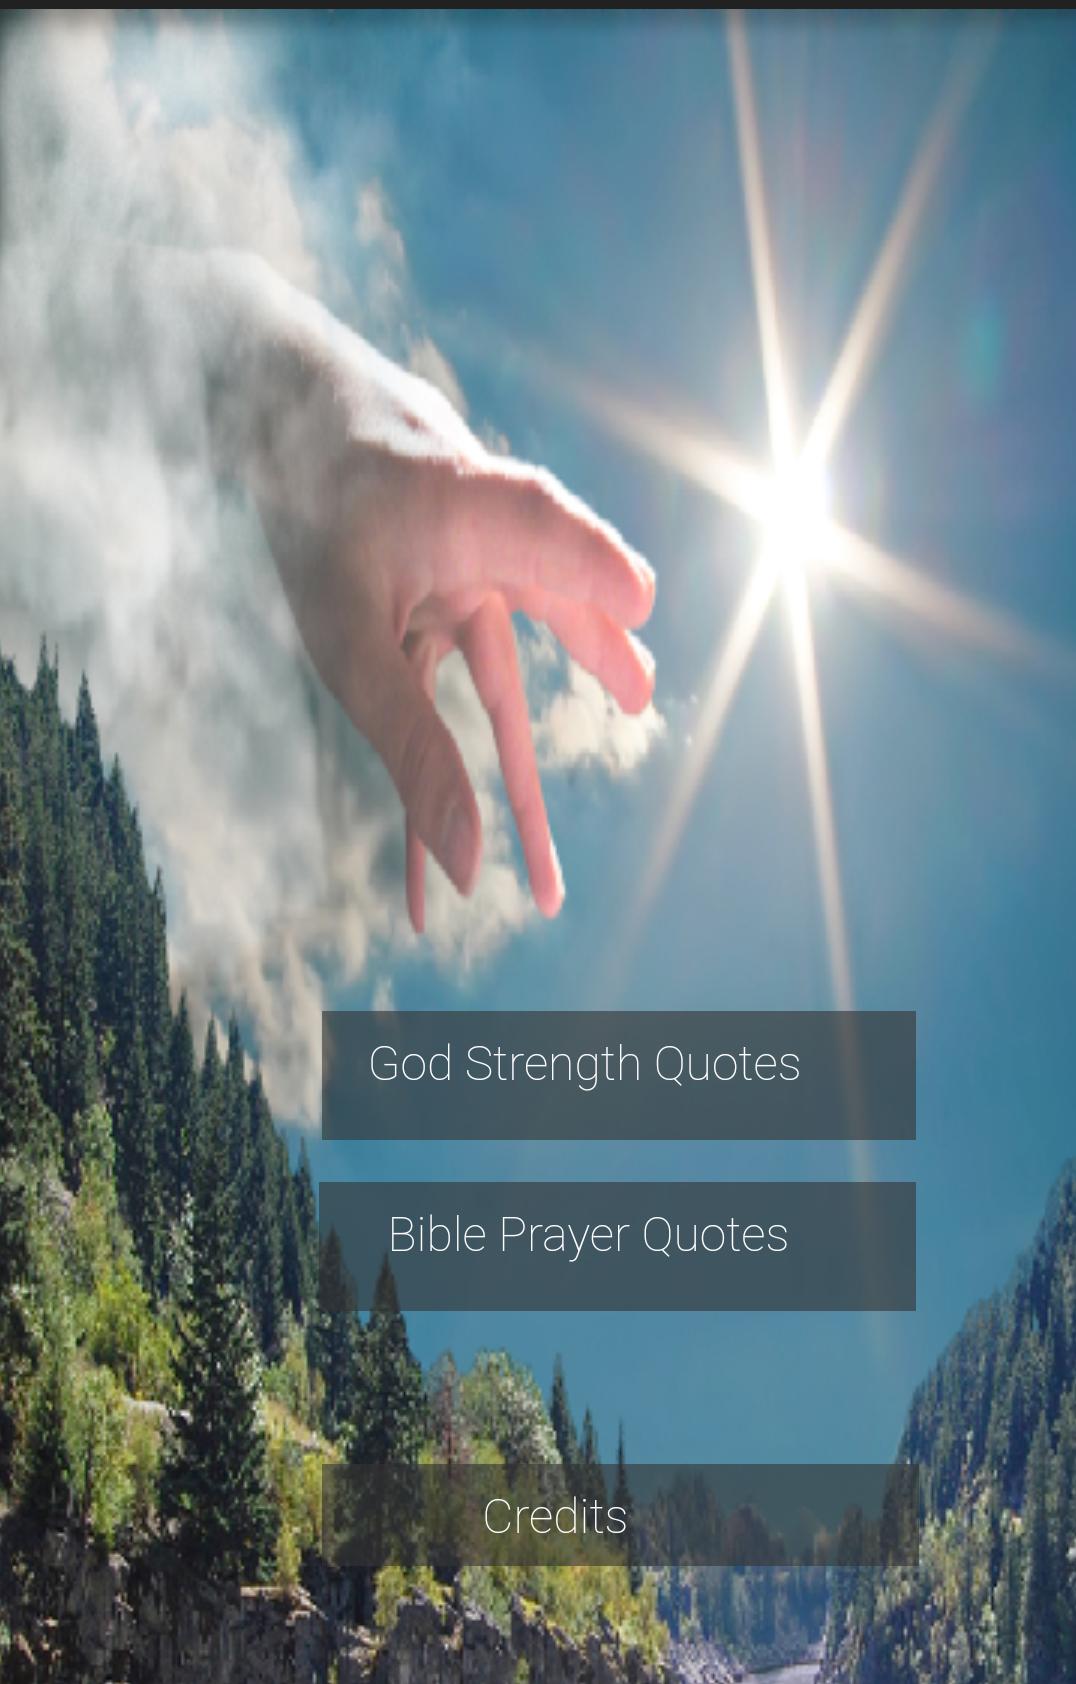 God's strength.